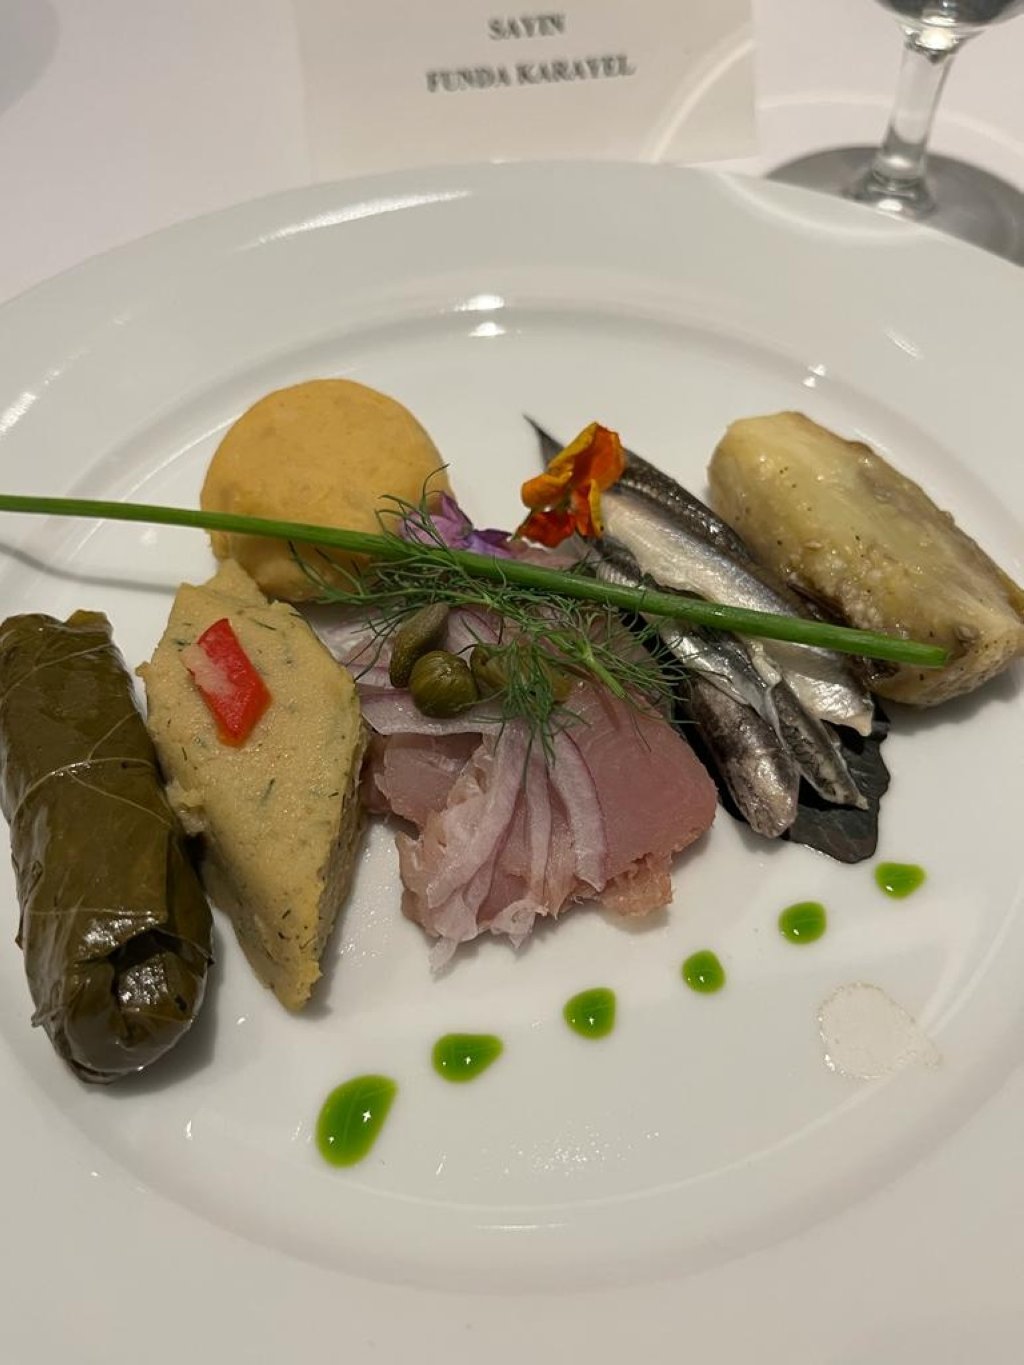 Foto makanan Turki yang disiapkan untuk makan malam di Gastro Show, Turkish House, New York, AS, 14 Januari 2022. (Foto oleh Funda Karayel)